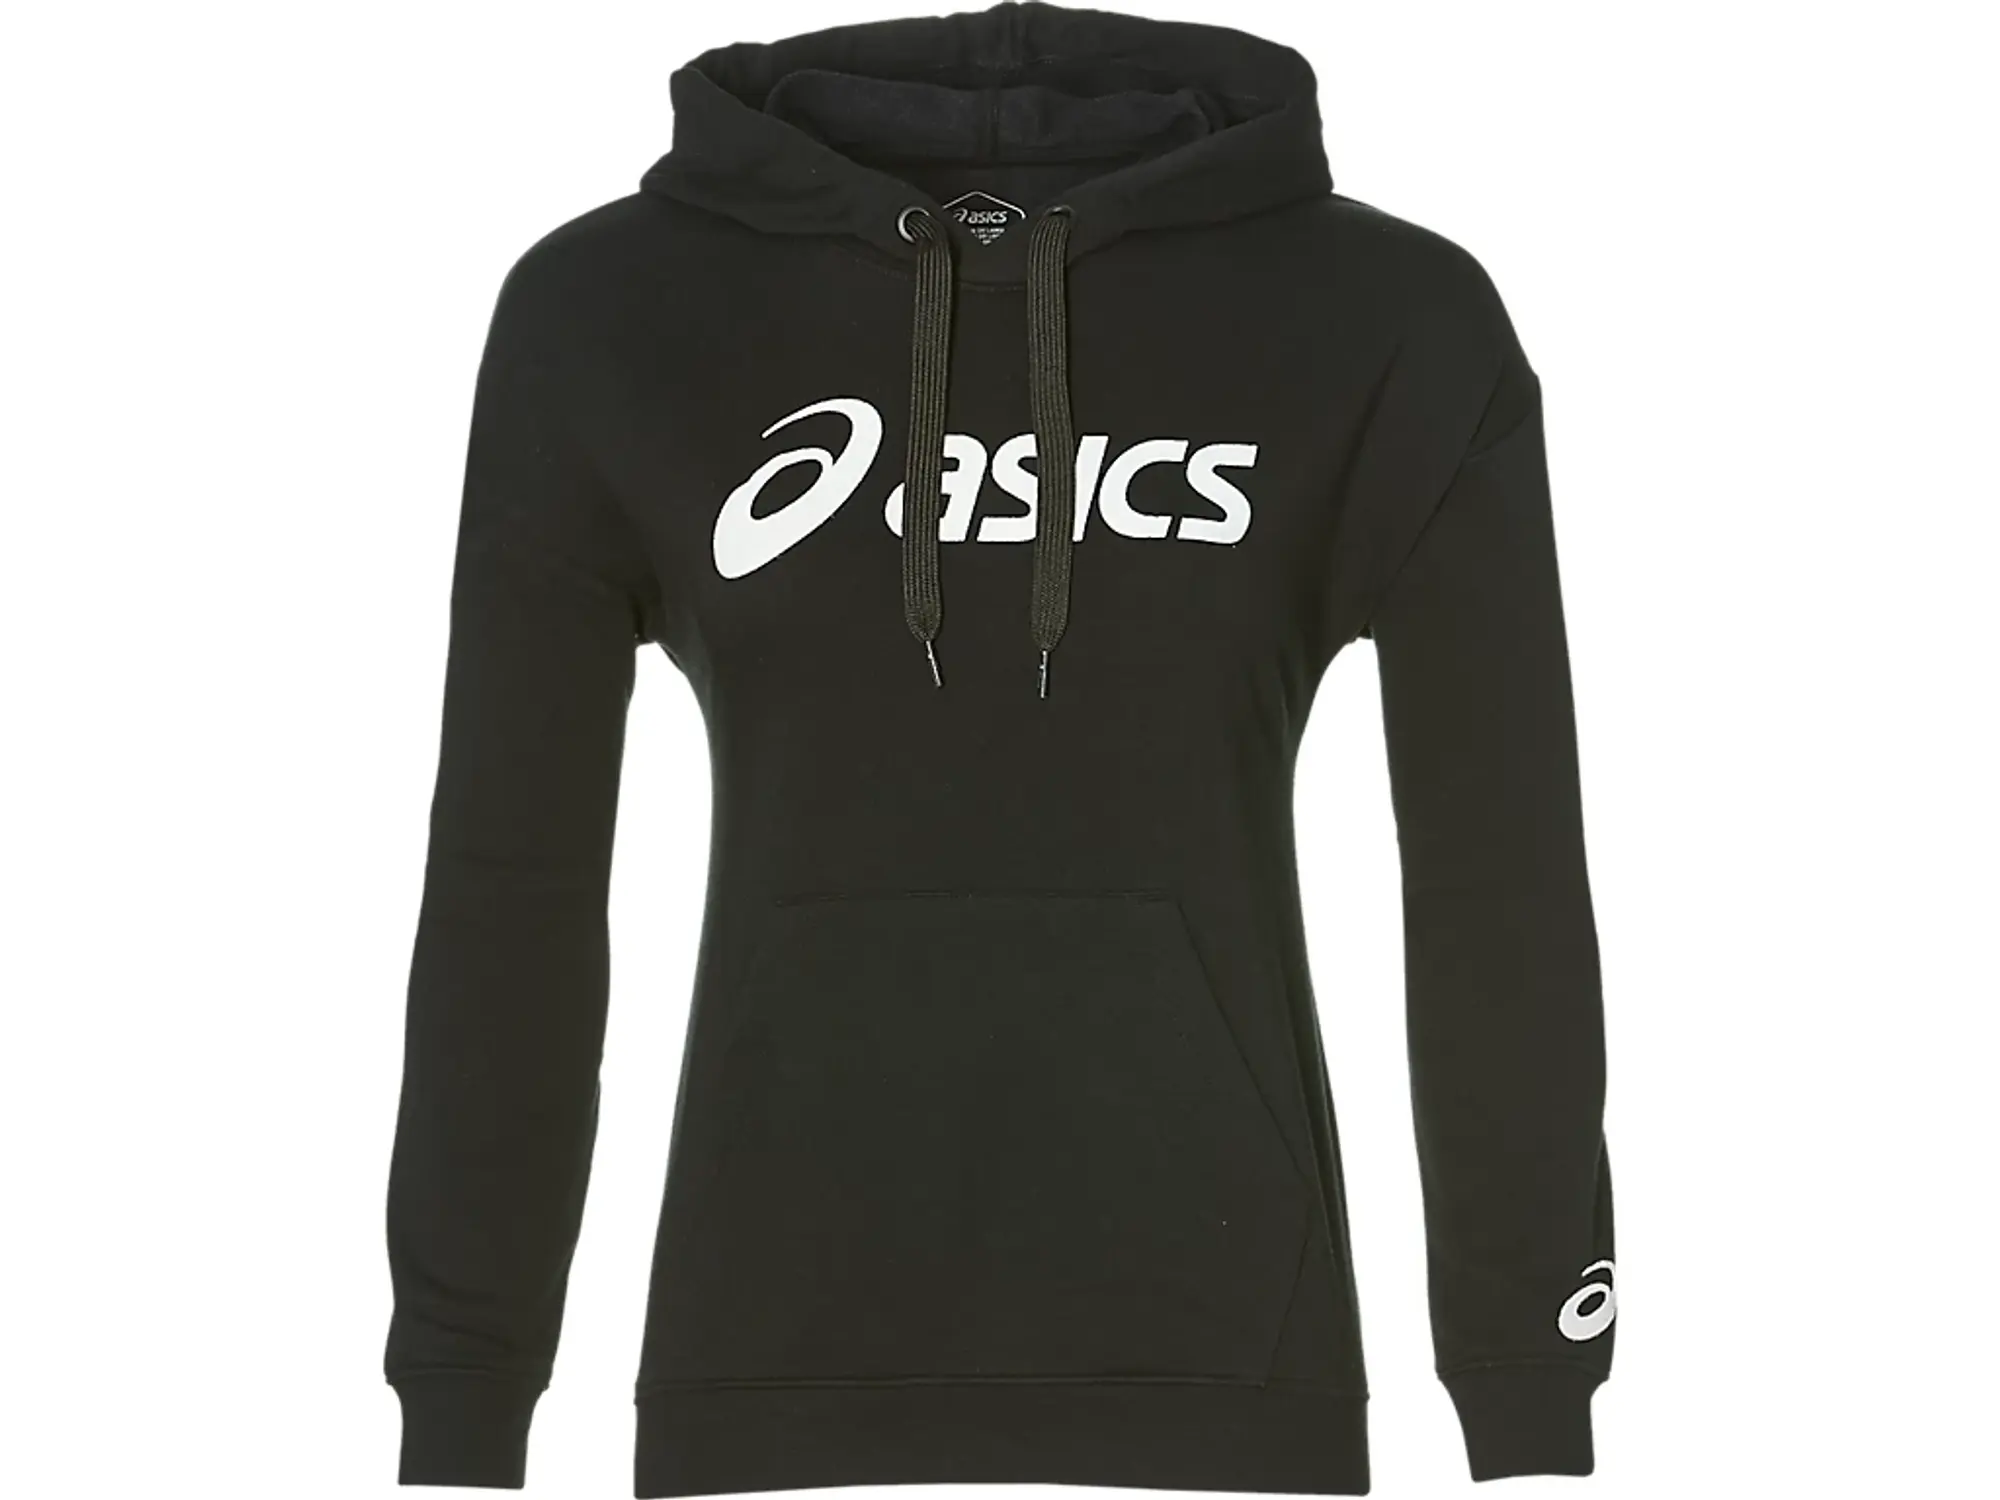 Asics Logo Oth Hoodie